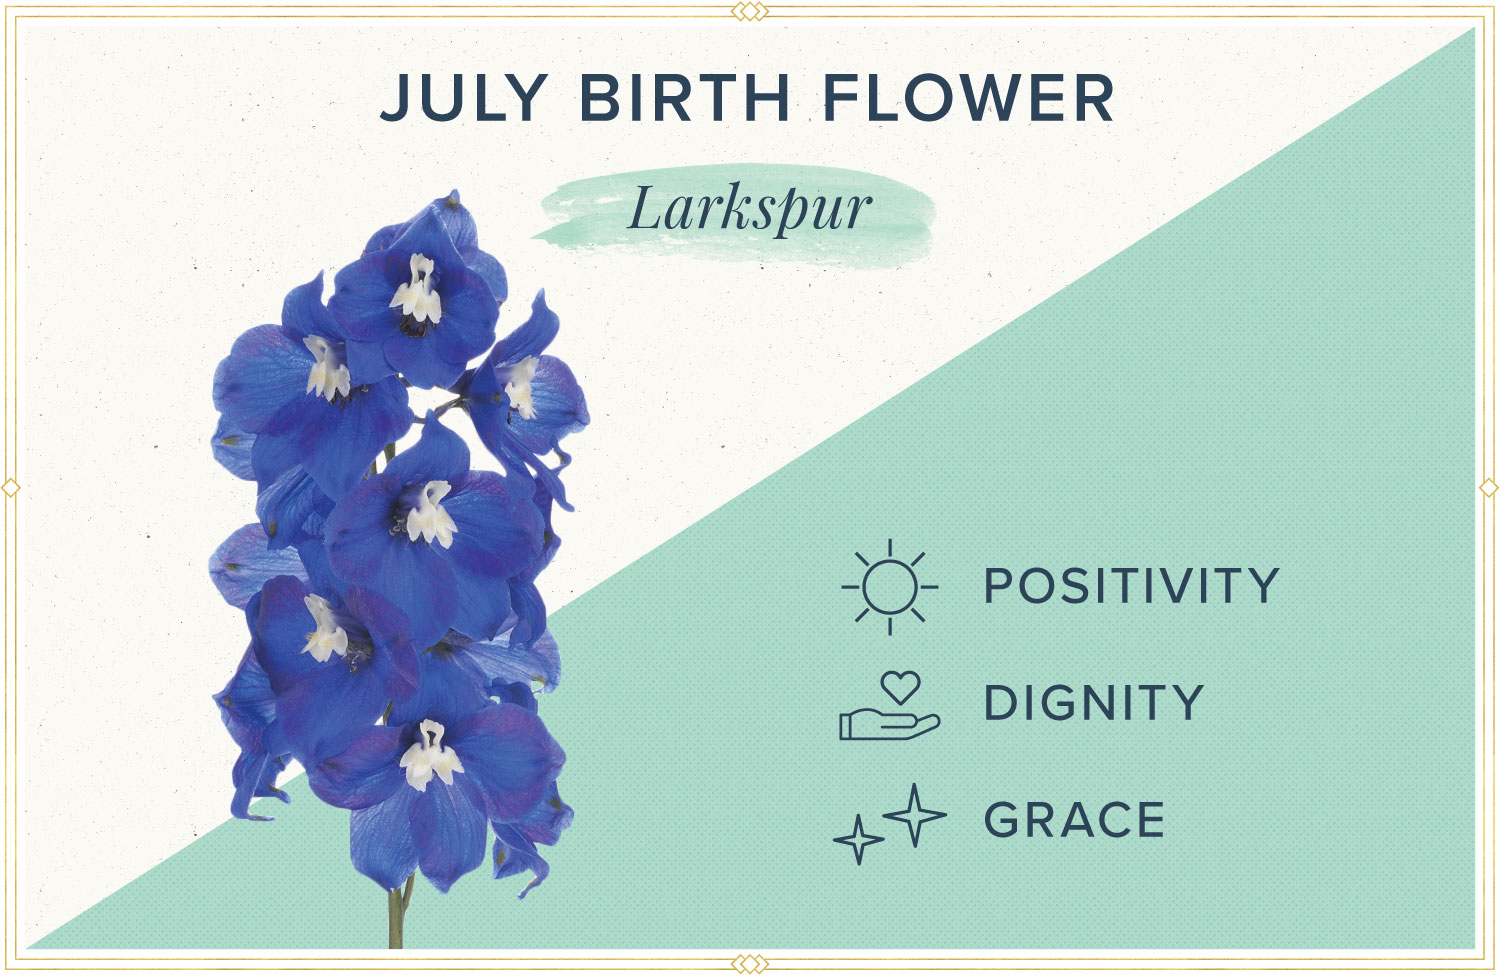 July birth month flower meaning larkspur
